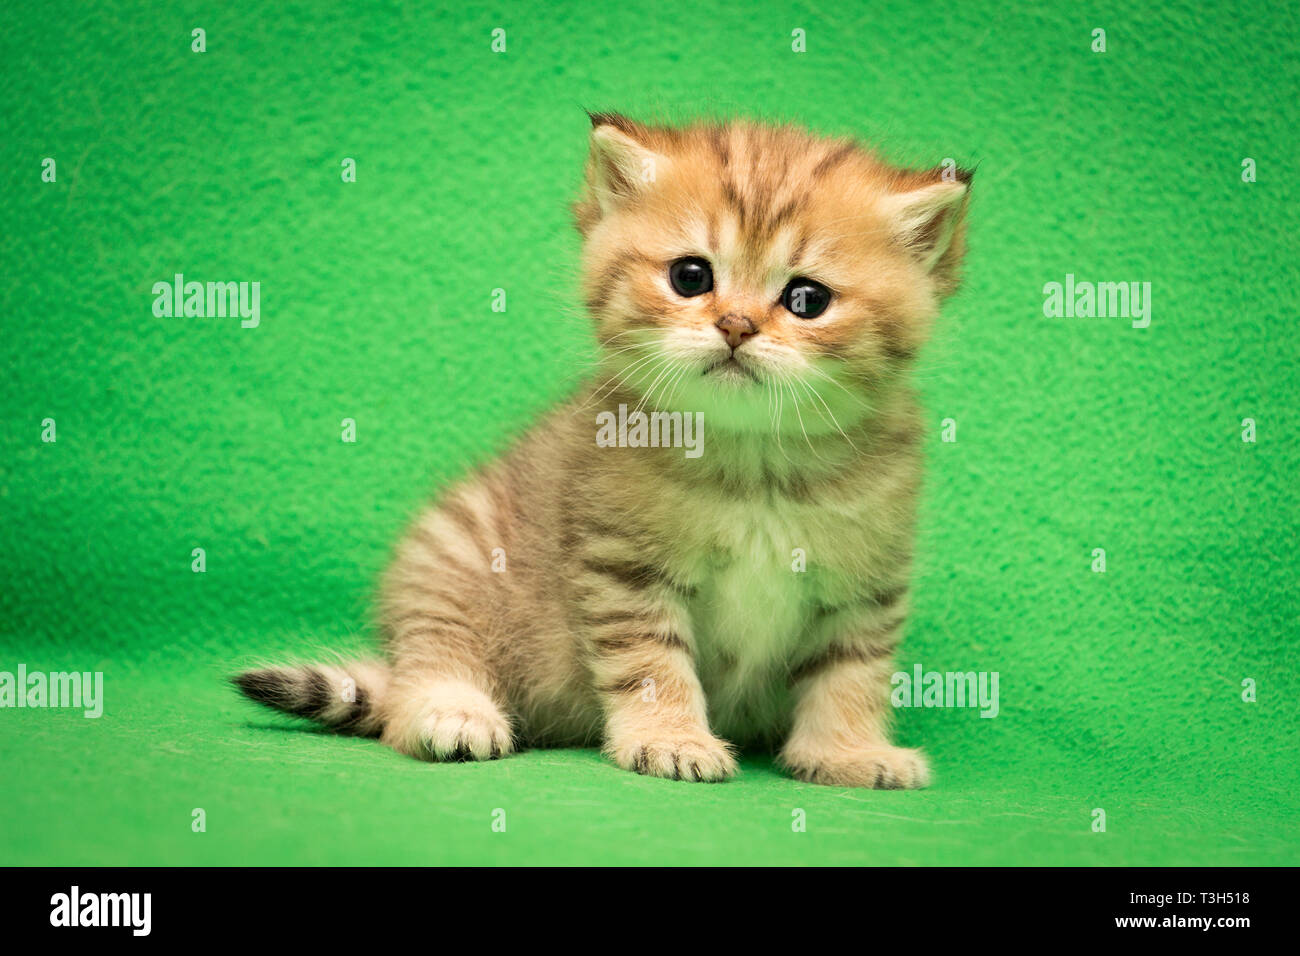 Golden Brown Cat Stock Photos & Golden Brown Cat Stock Images - Alamy